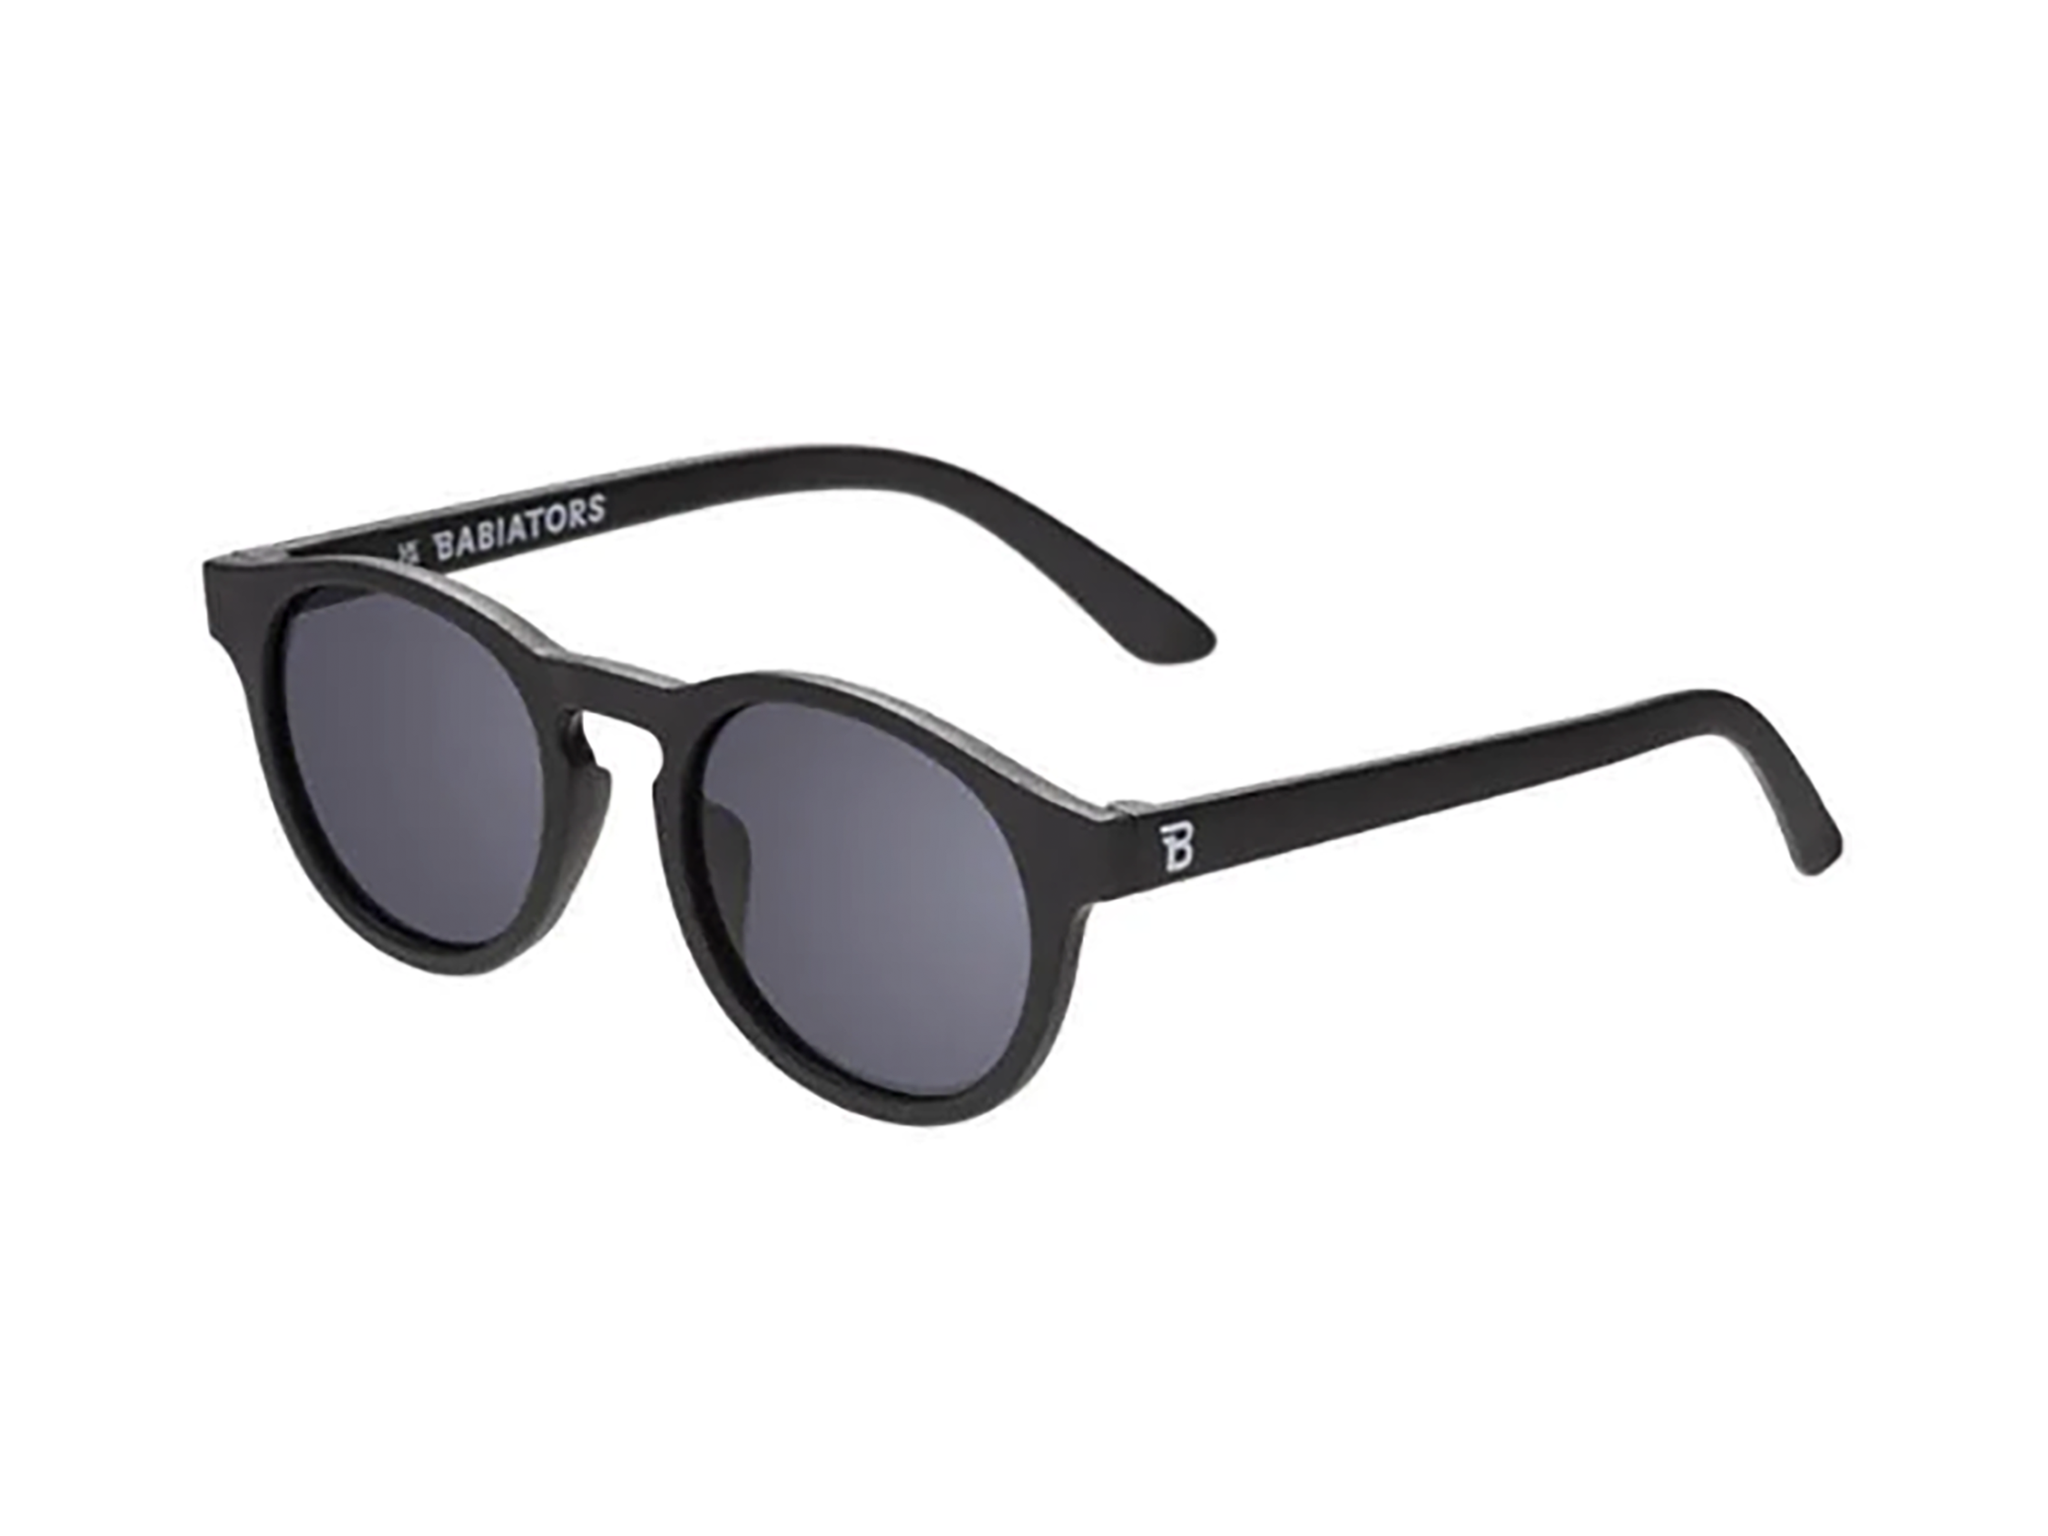 Babiators original keyhole sunglasses (three to five), jet black